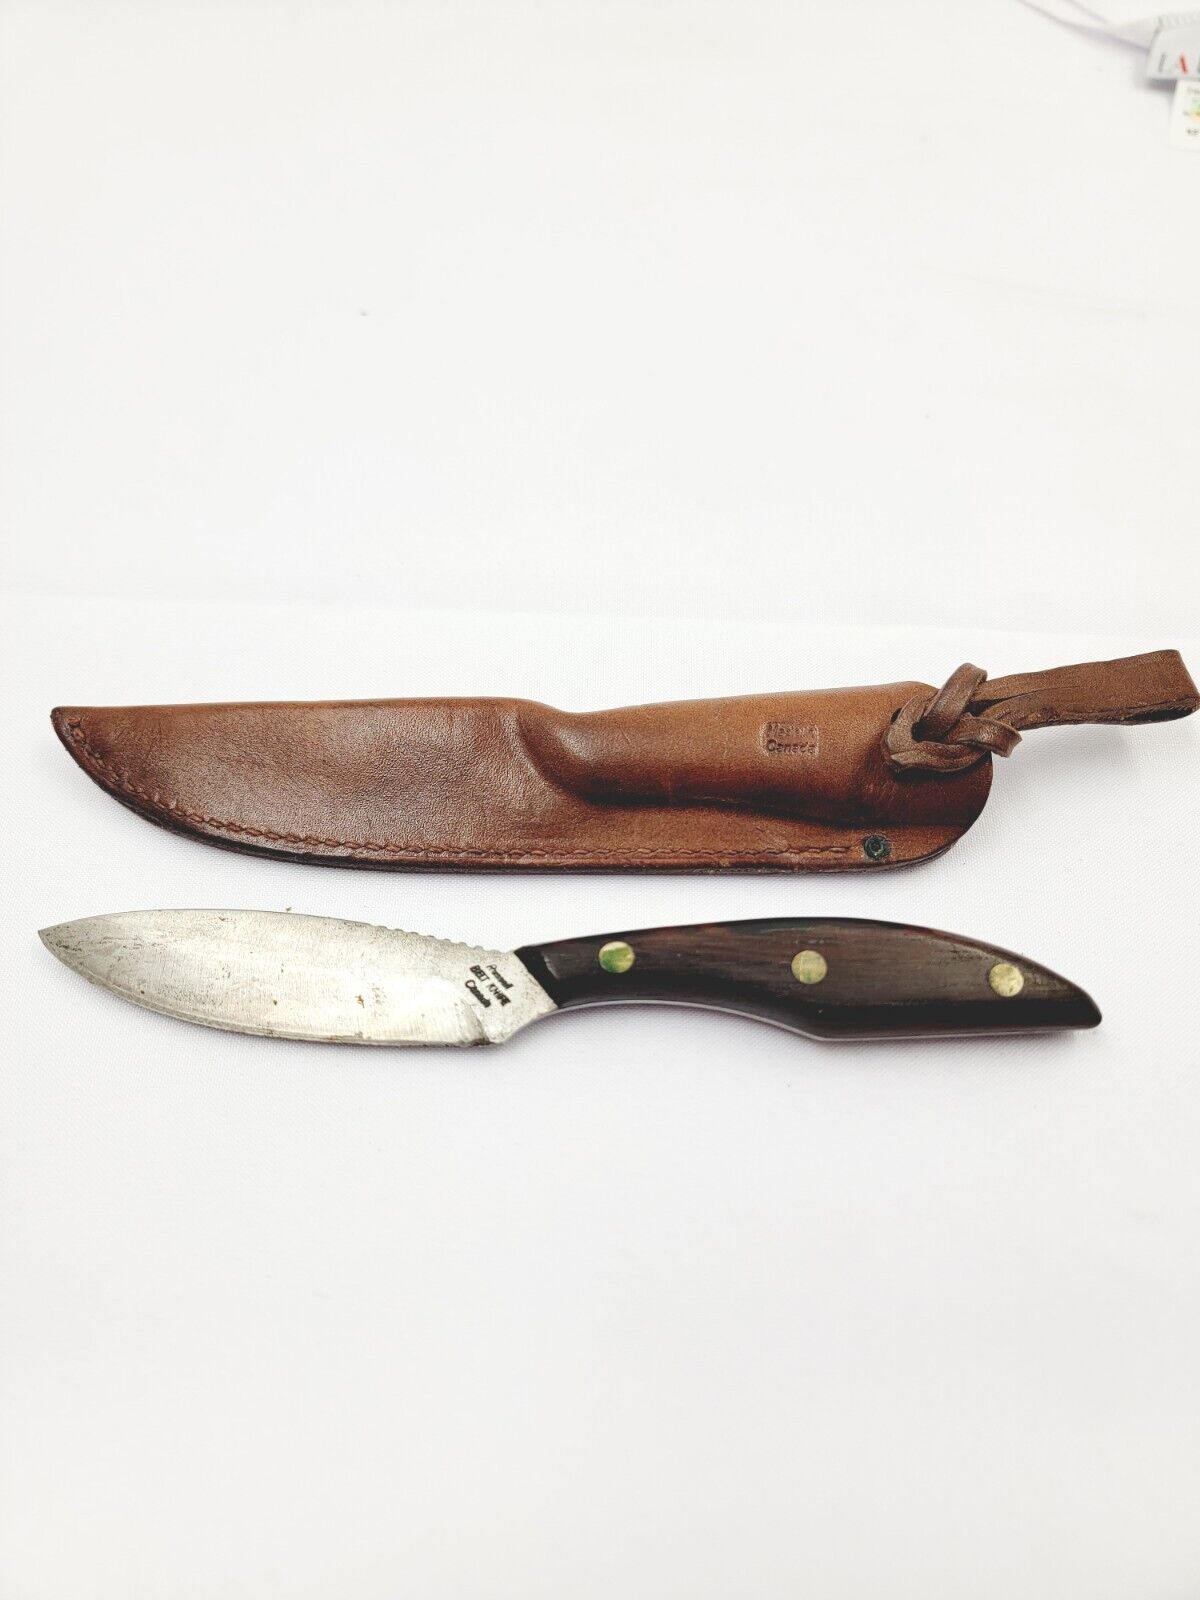  Russell Belt Knife RD-1958 Canada